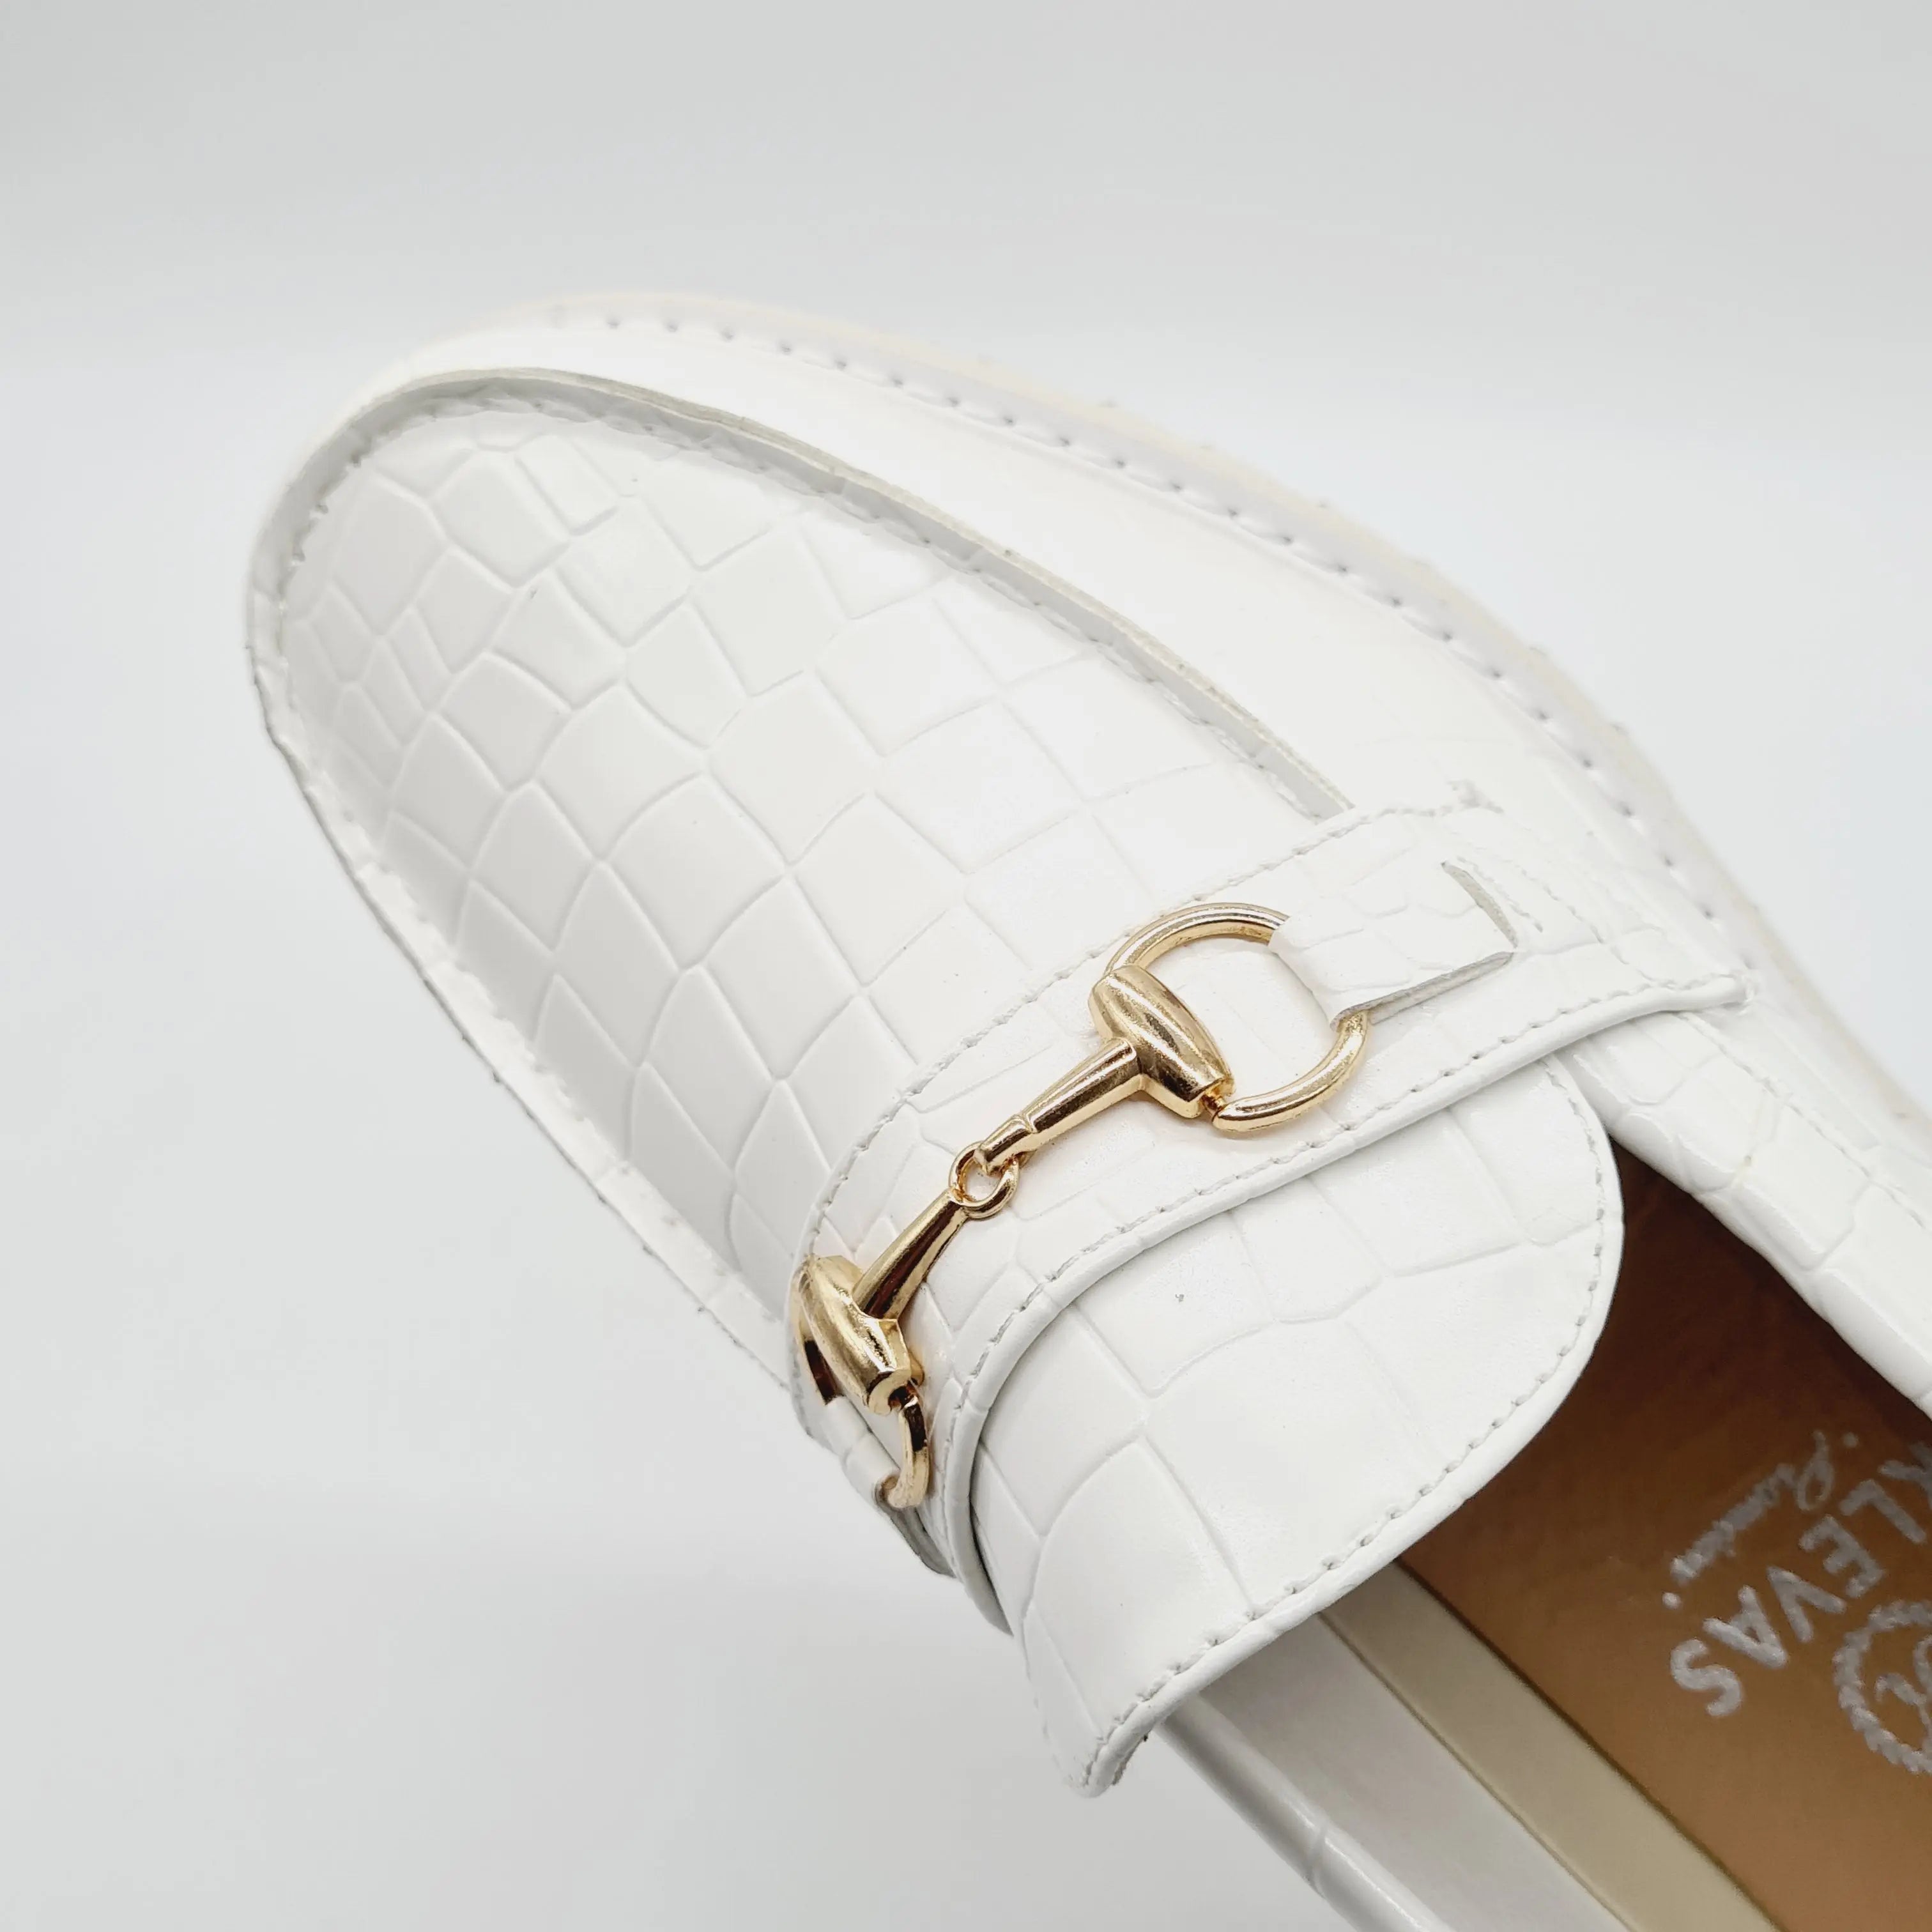 KLEVAS MARCO CROC WHITE Loafers | familyshoecentre